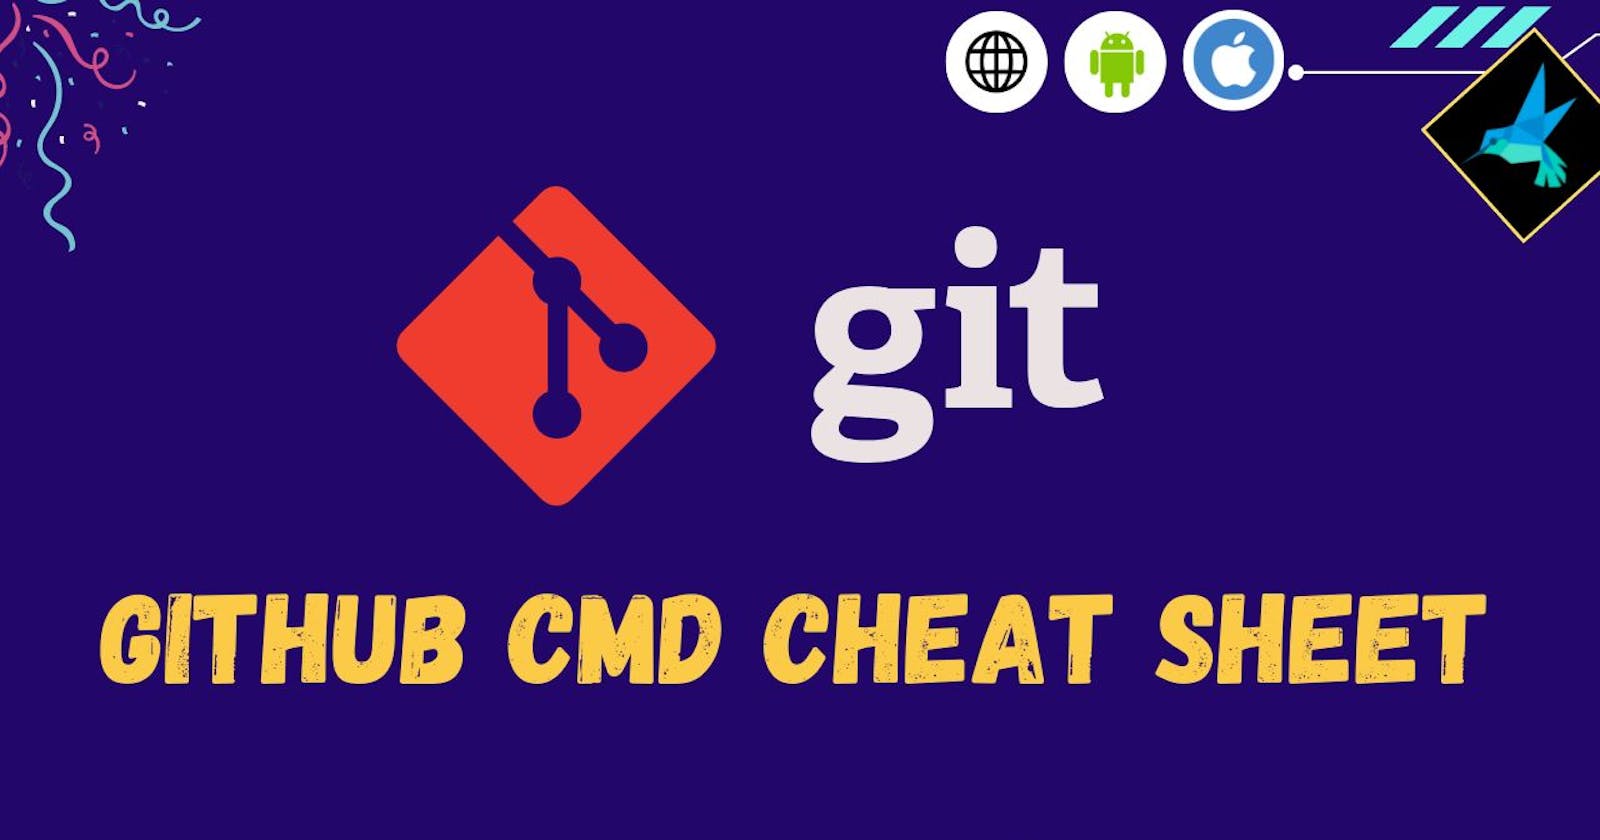 Git & GitHub Cheat Sheet